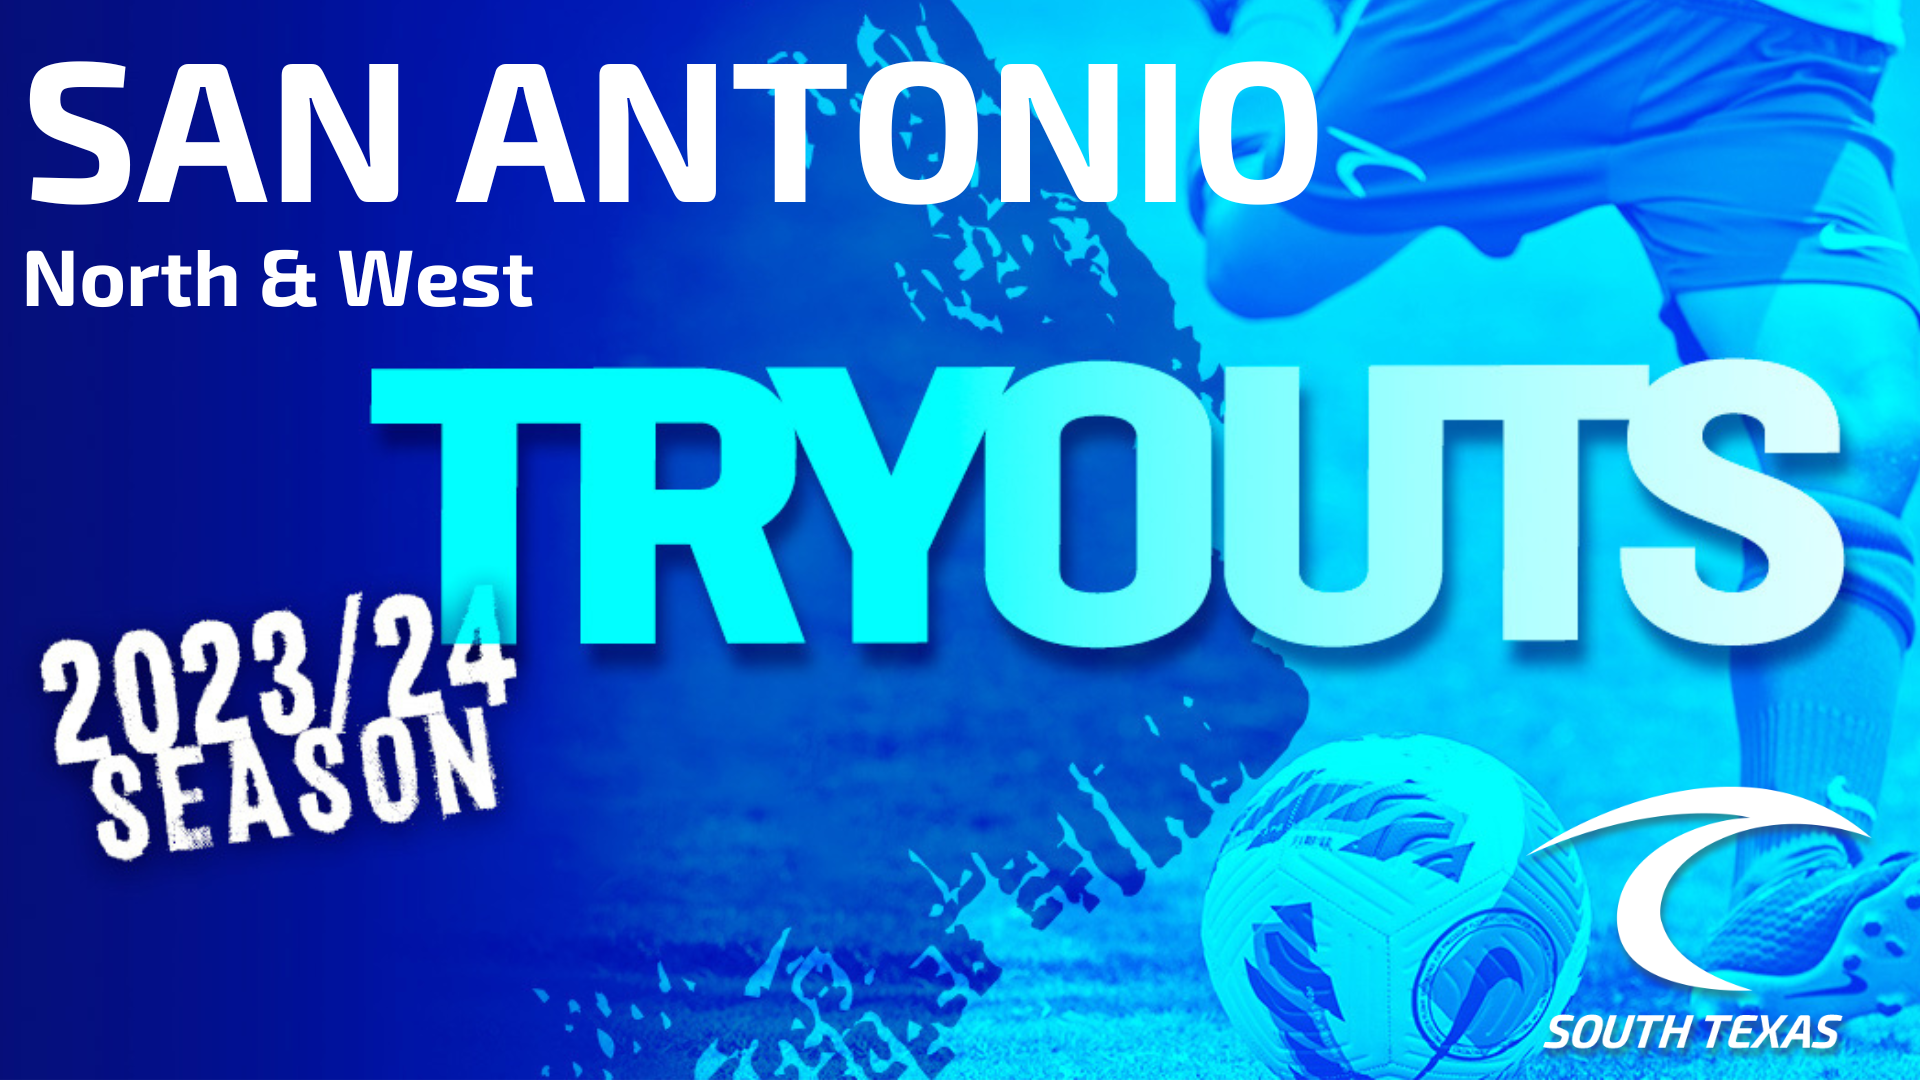 San Antonio - Tryouts